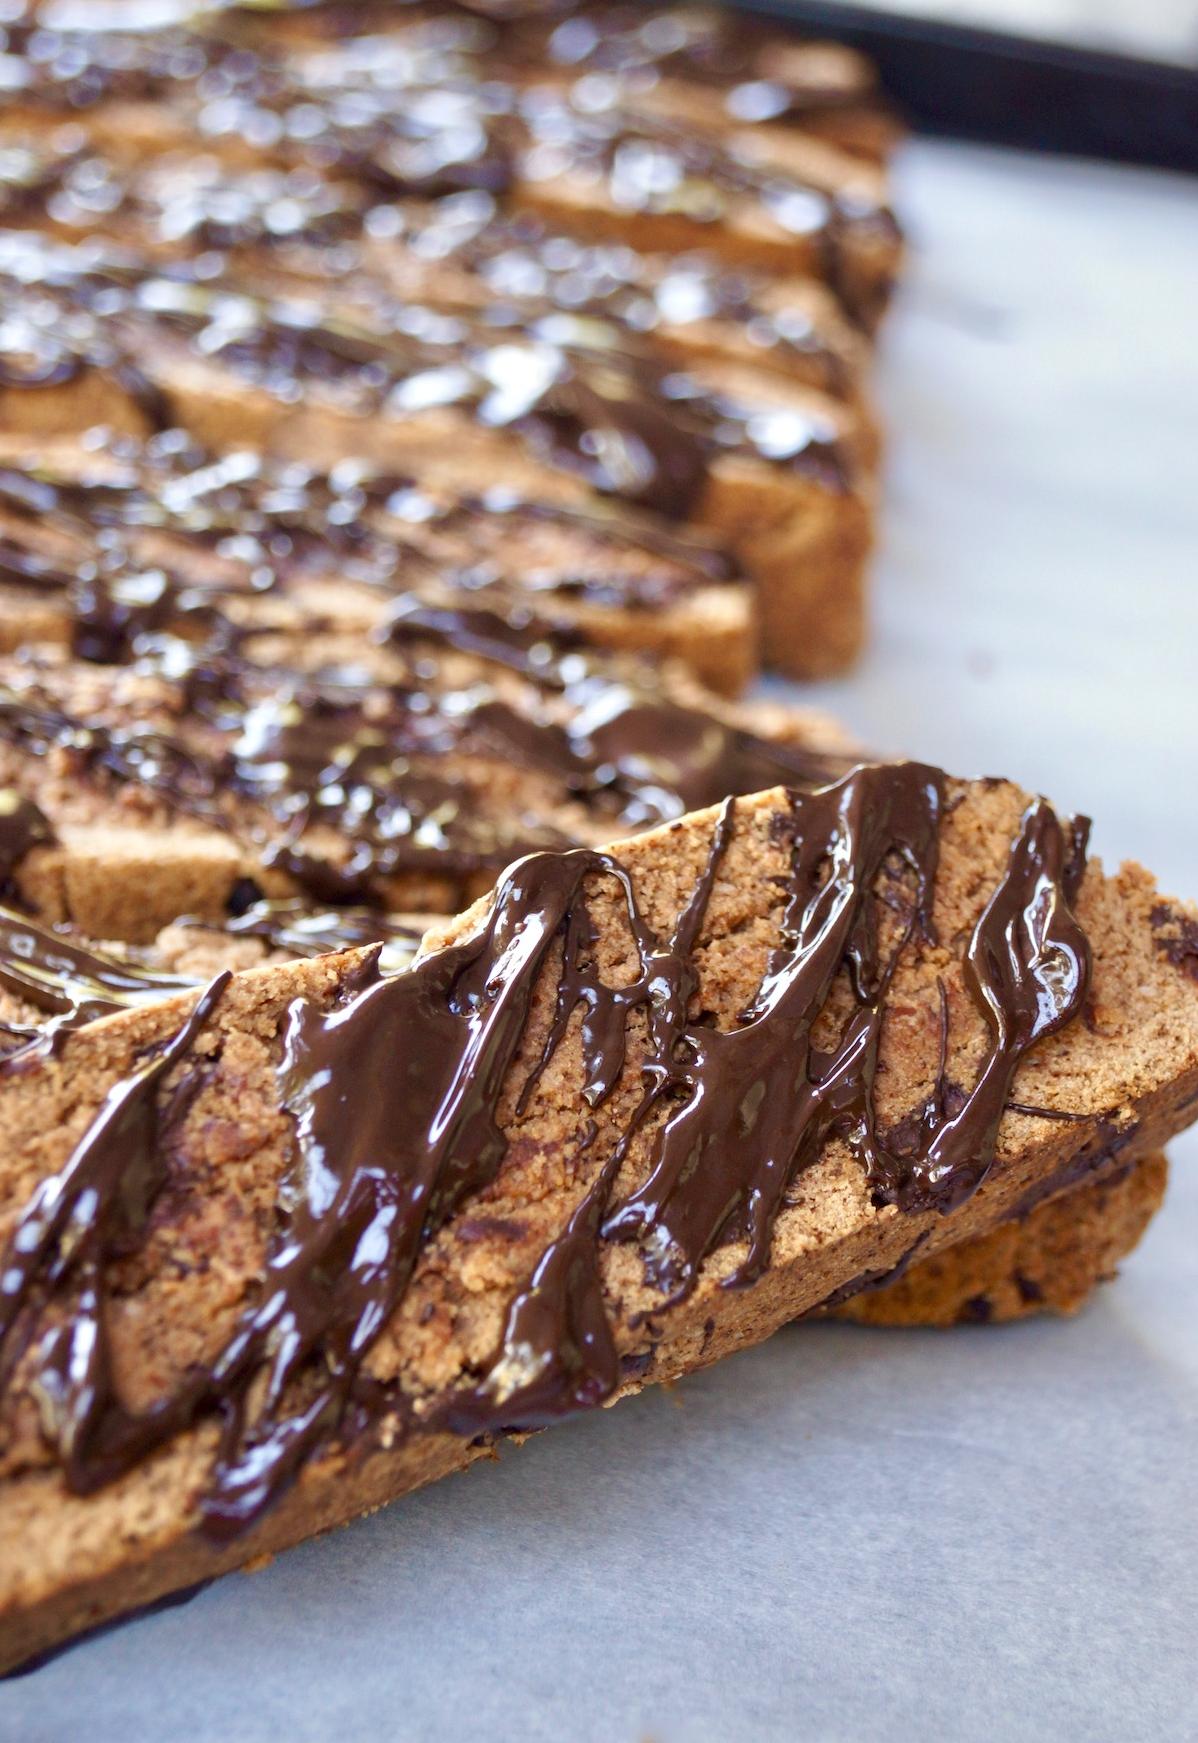  Take a bite and savor the chocolate goodness!